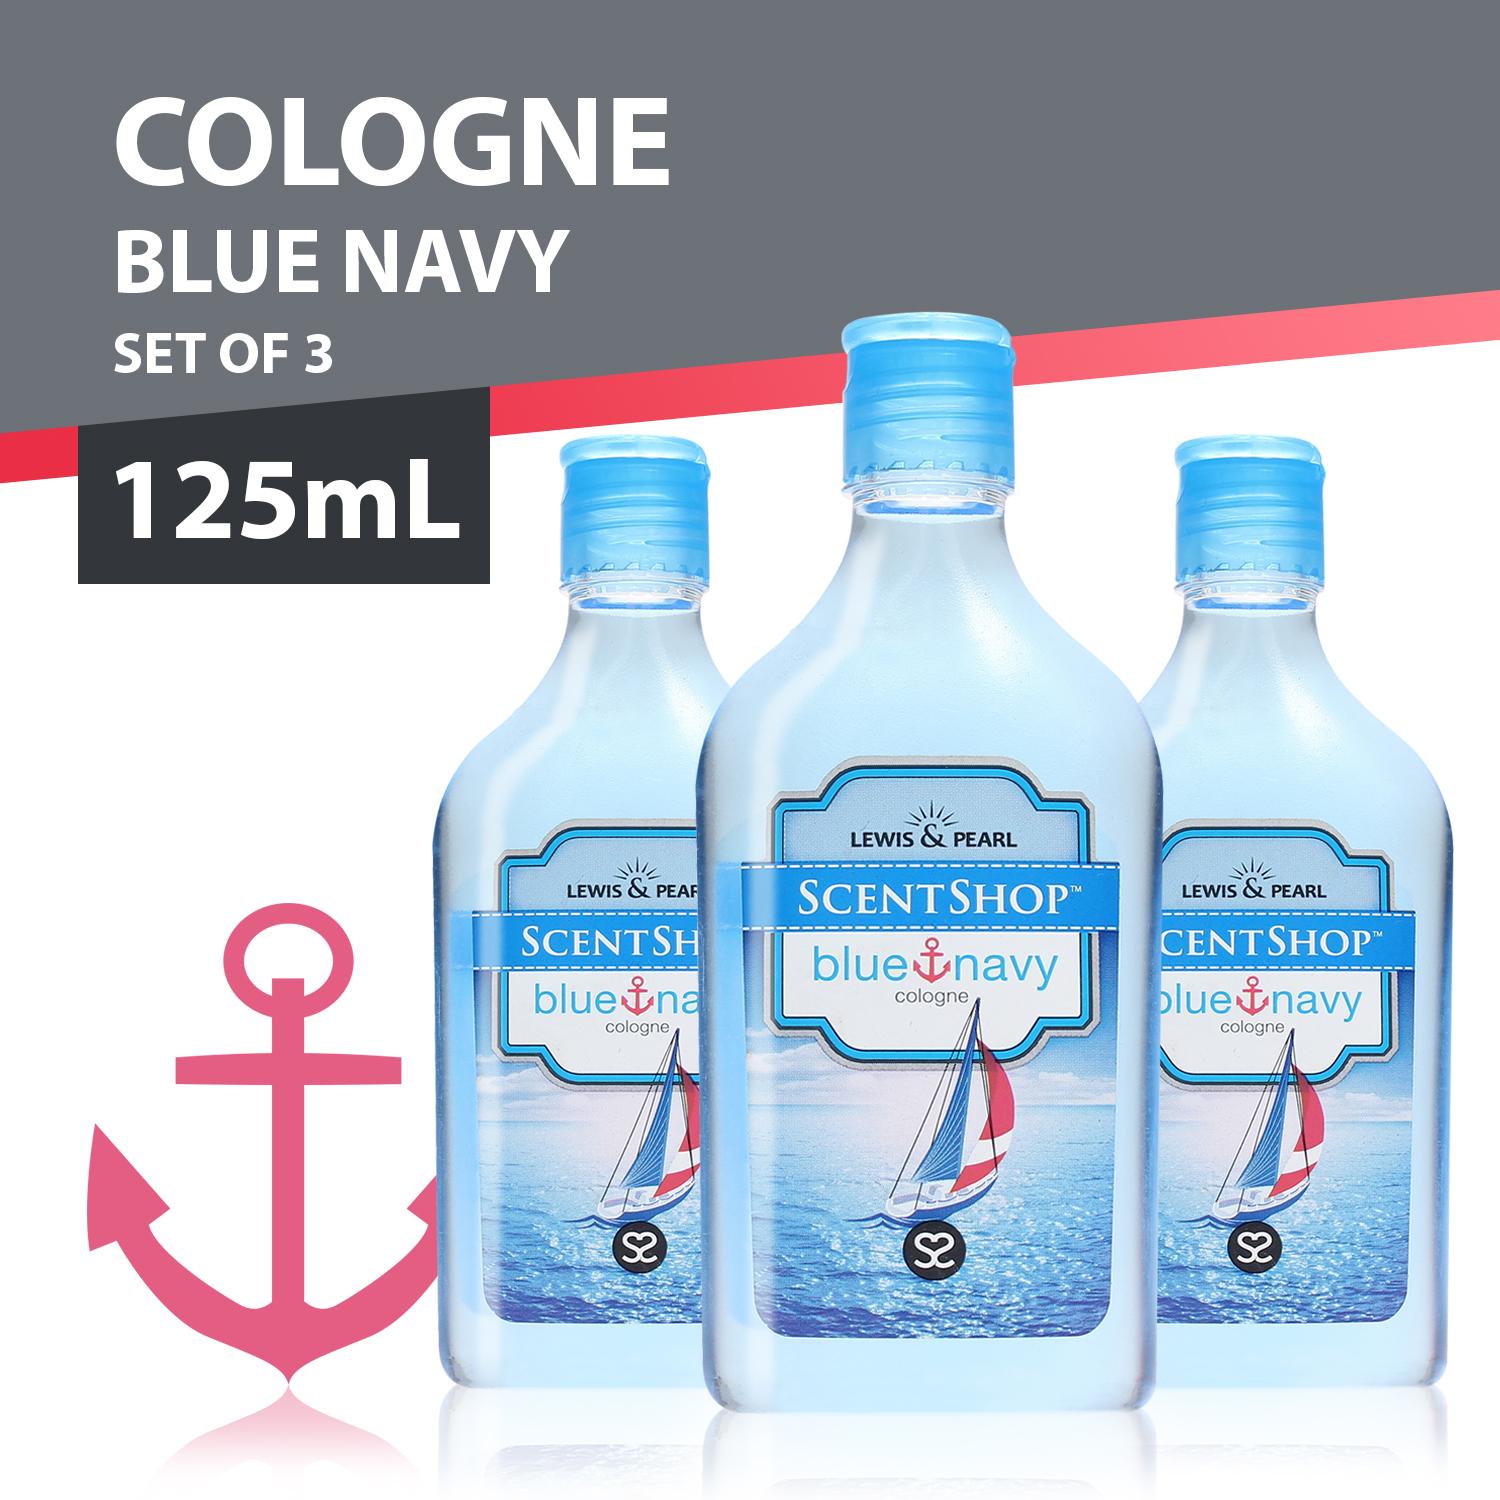 Lewis & Pearl ScentShop Cologne Blue Navy (125ml) Set of 3